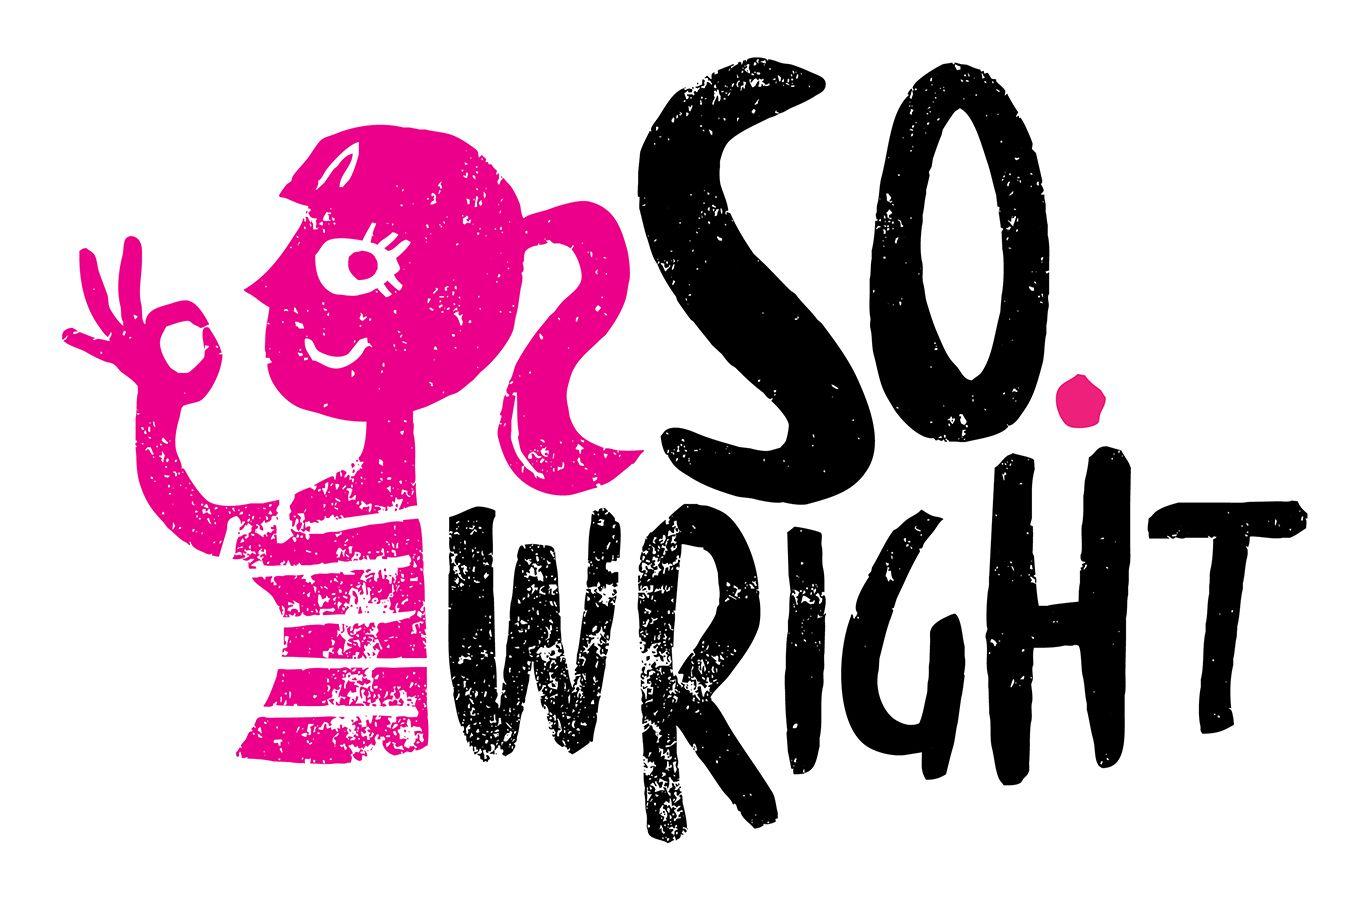 Presenter Logo - So. Wright | Paul Burgess Graphic Design